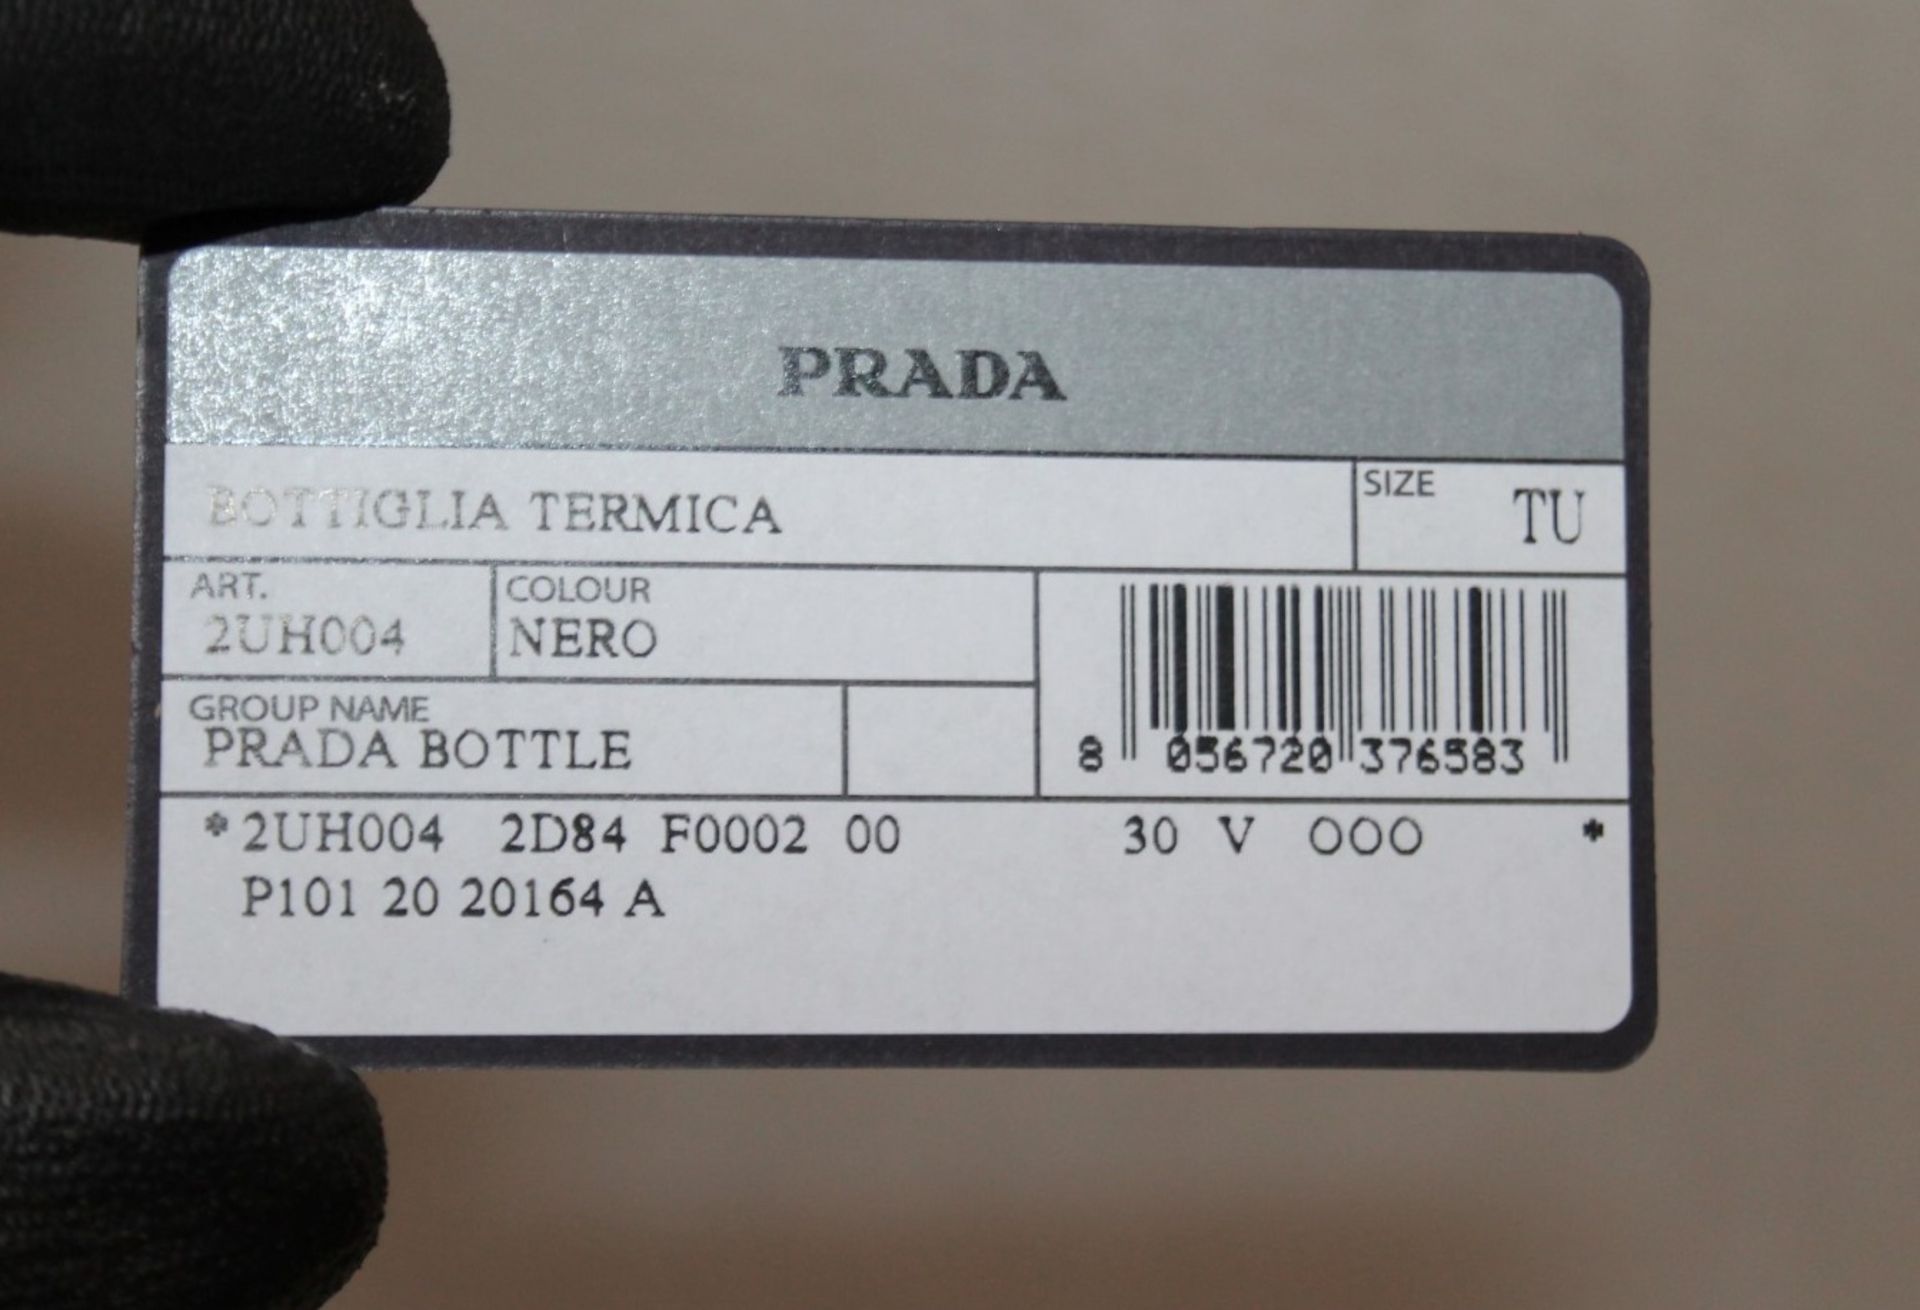 1 x PRADA Stainless Steel Water Bottle In Black, 500 ml - Original Price £100.00 - Image 5 of 8